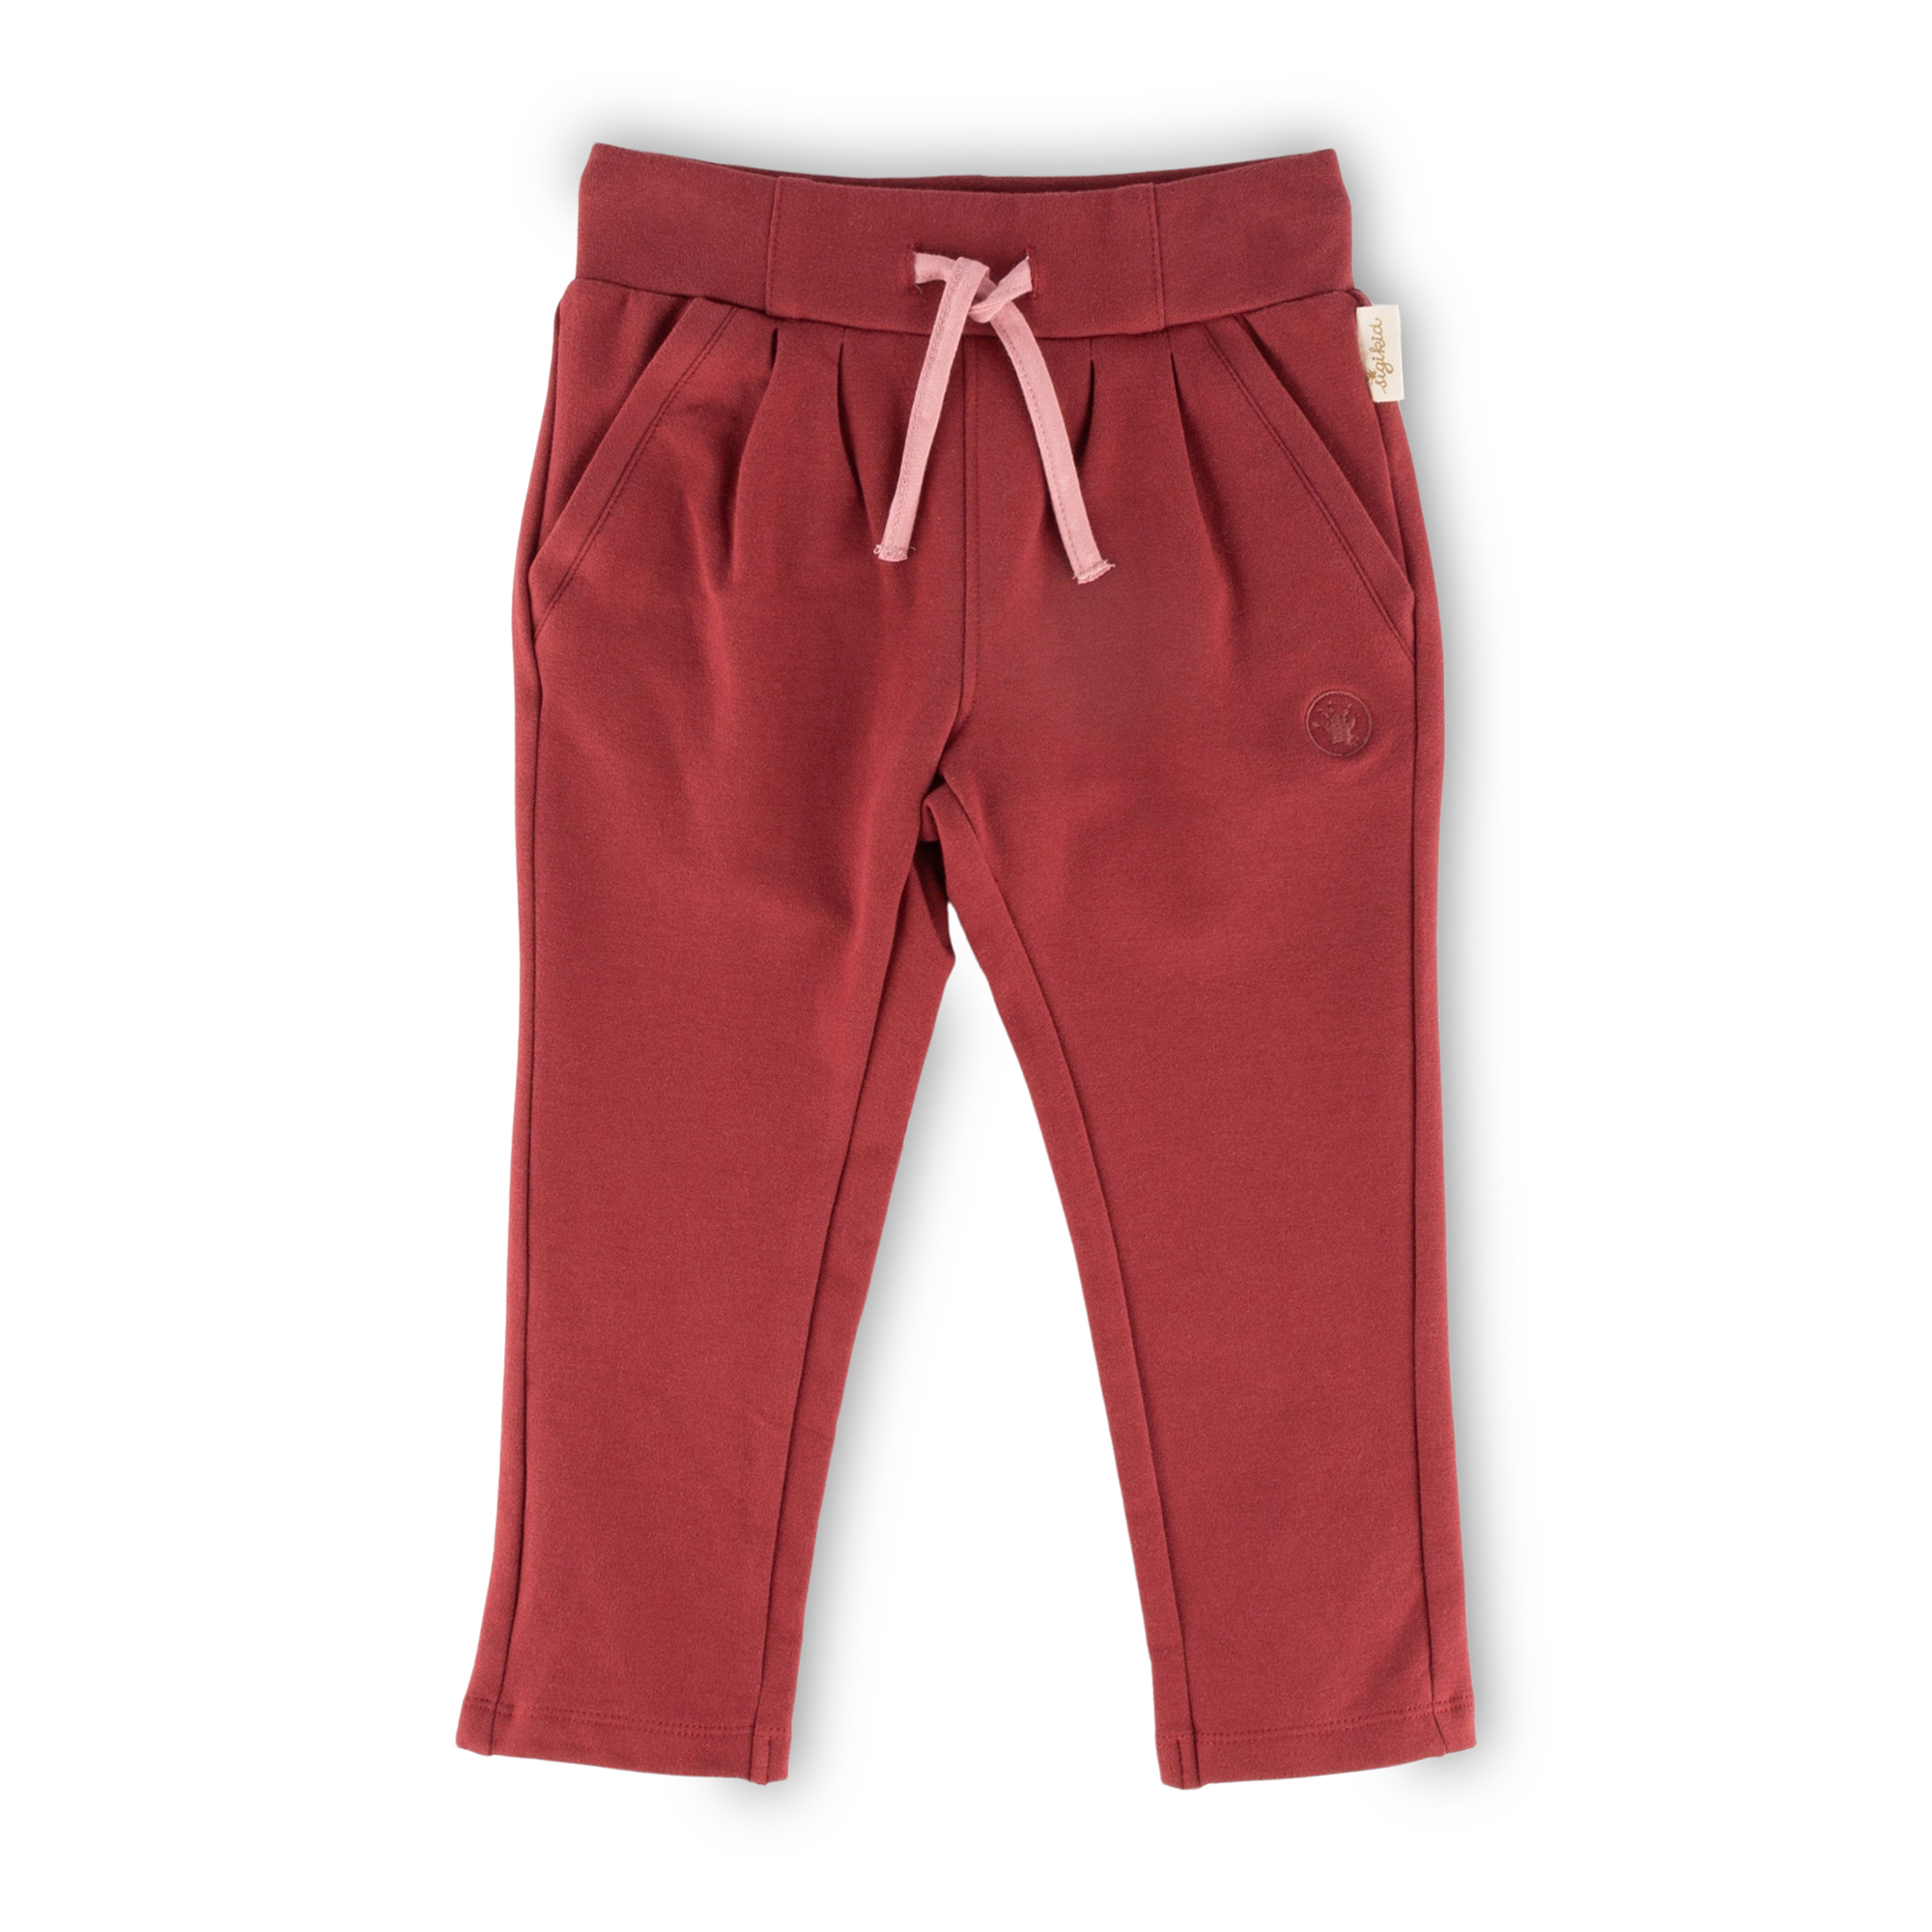 Children's sweat pants, dark red